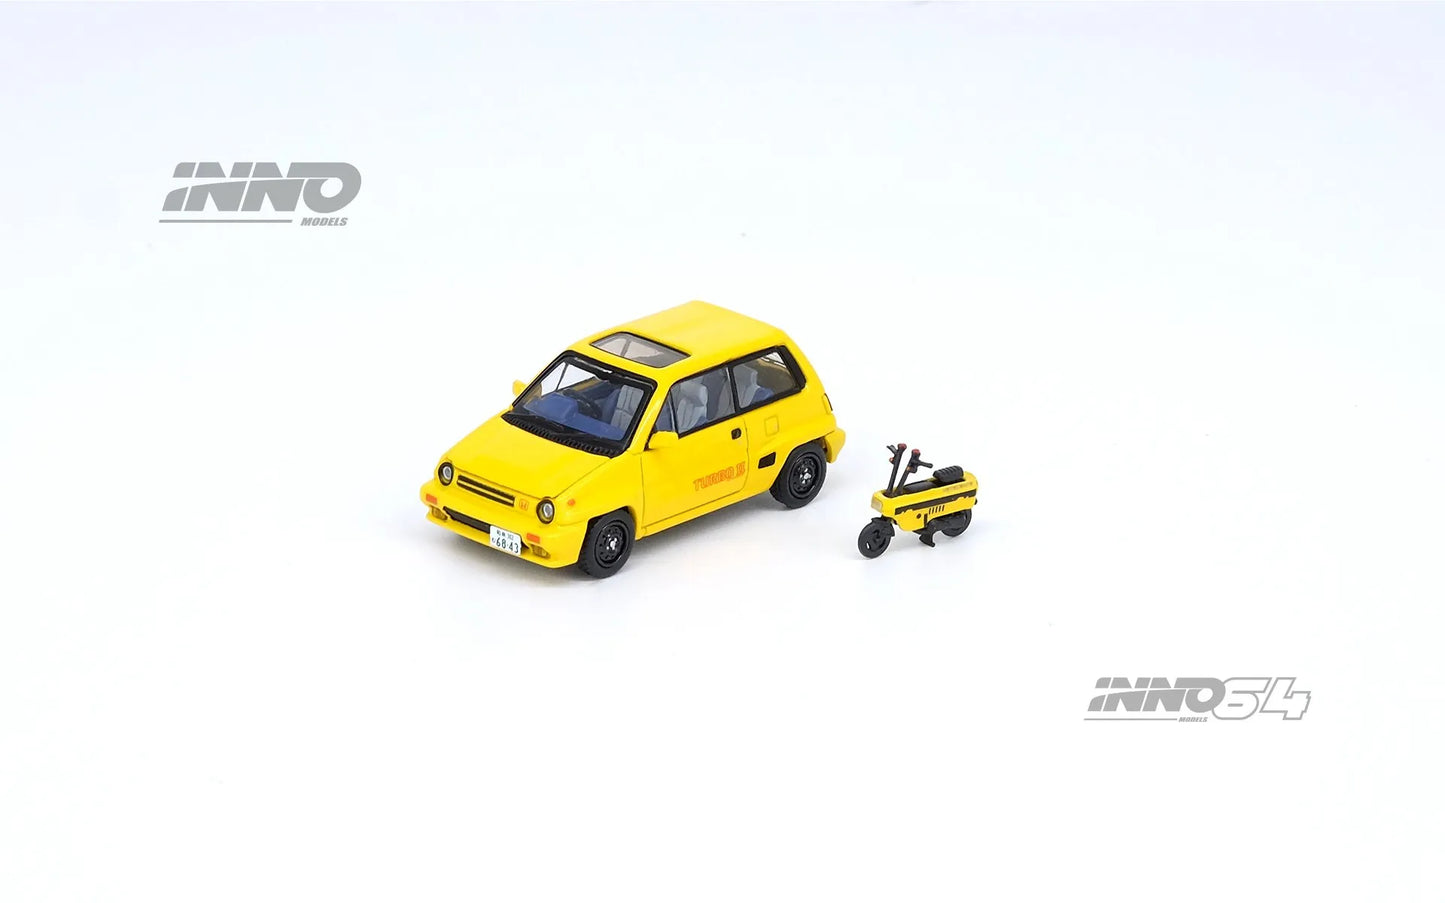 Inno Models Inno64 Honda City Turbo II Yellow with Motocompo